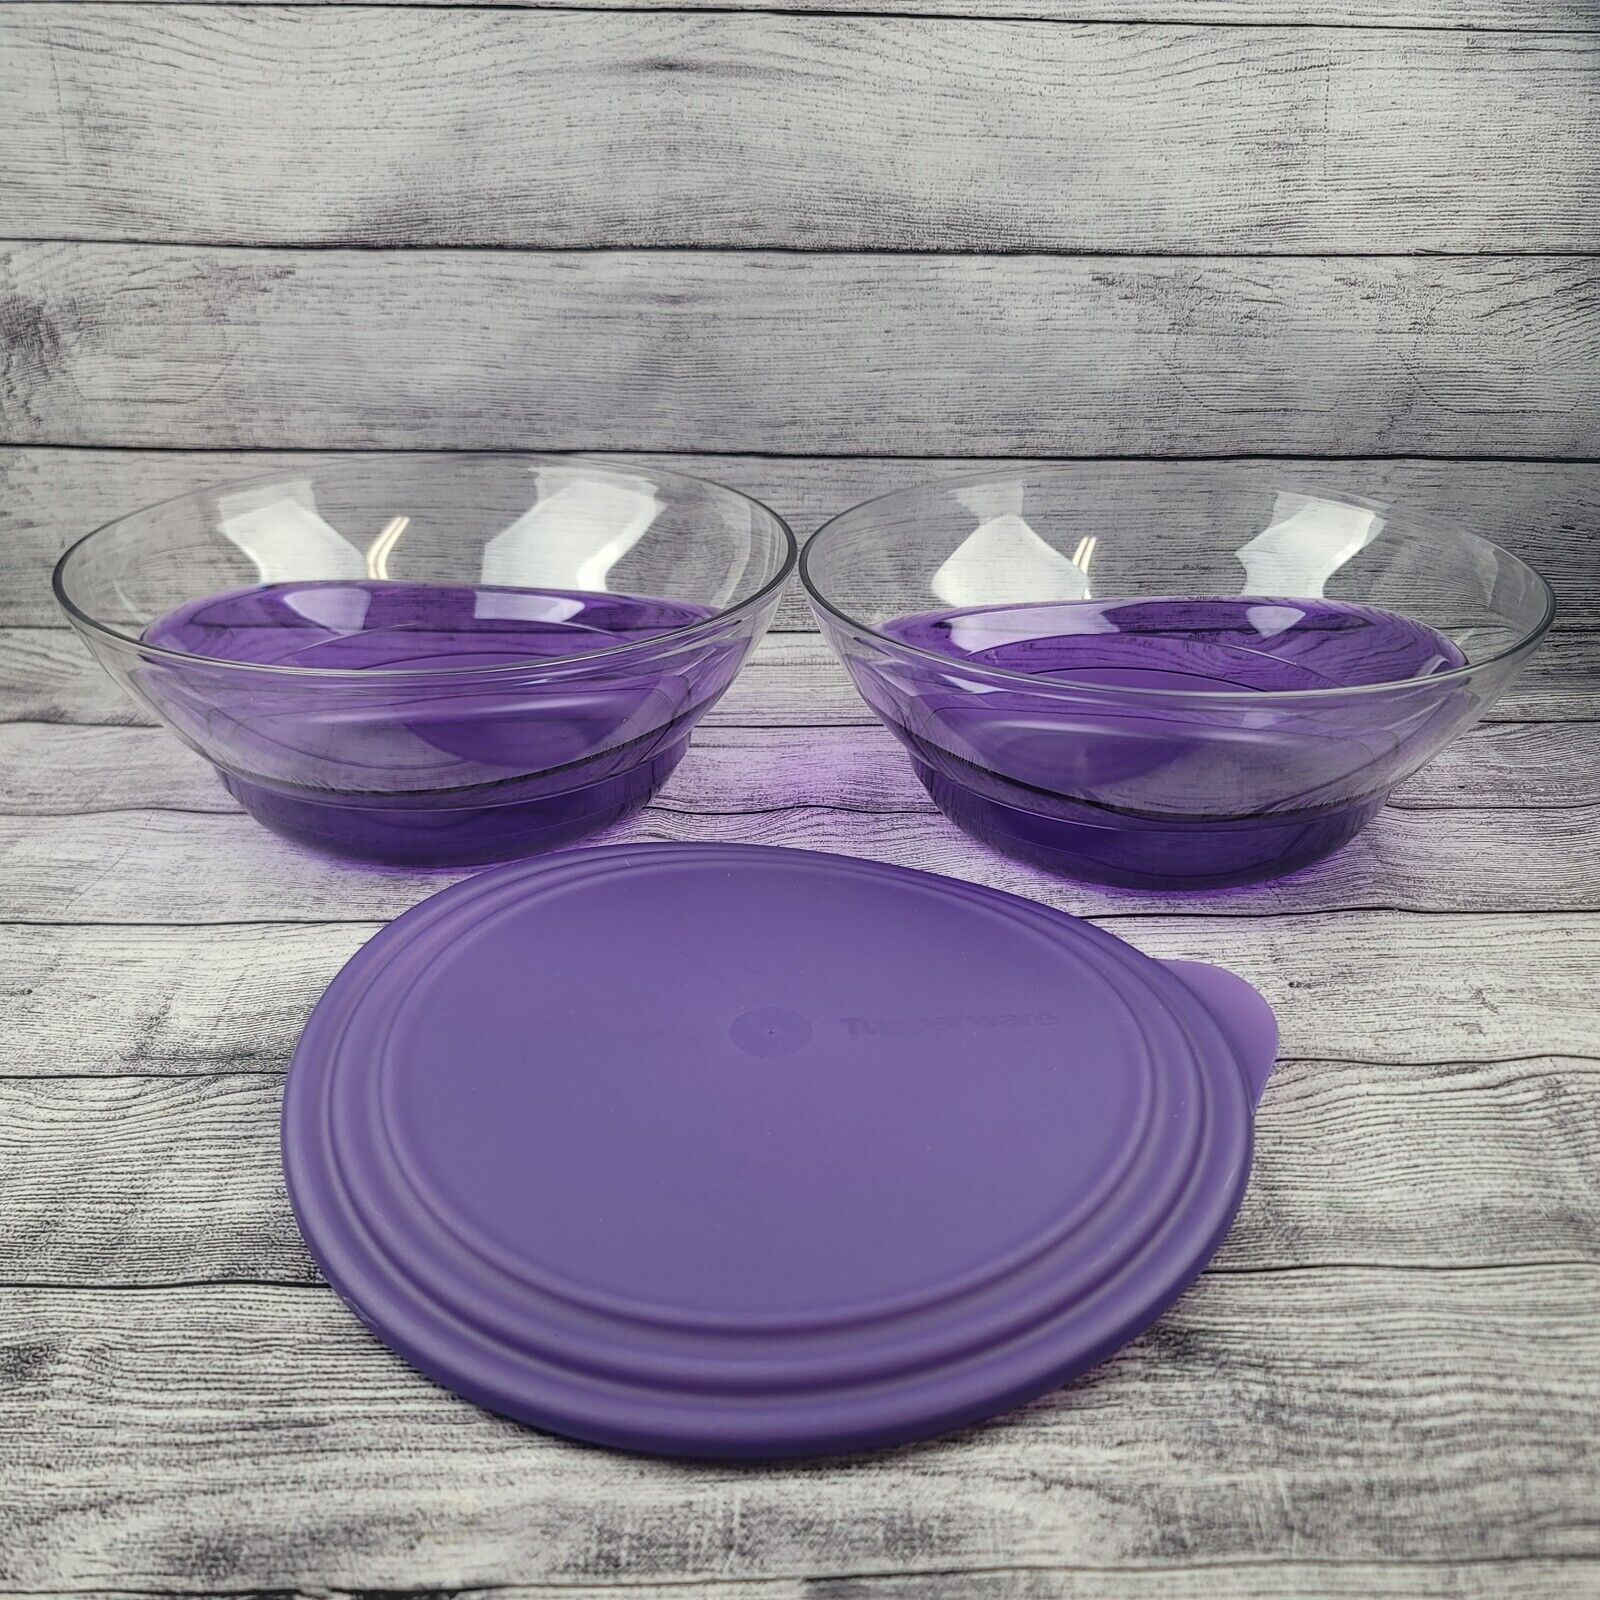 2x Tupperware Sheerly Elegant Bowl Acrylic Purple 3.4 qt